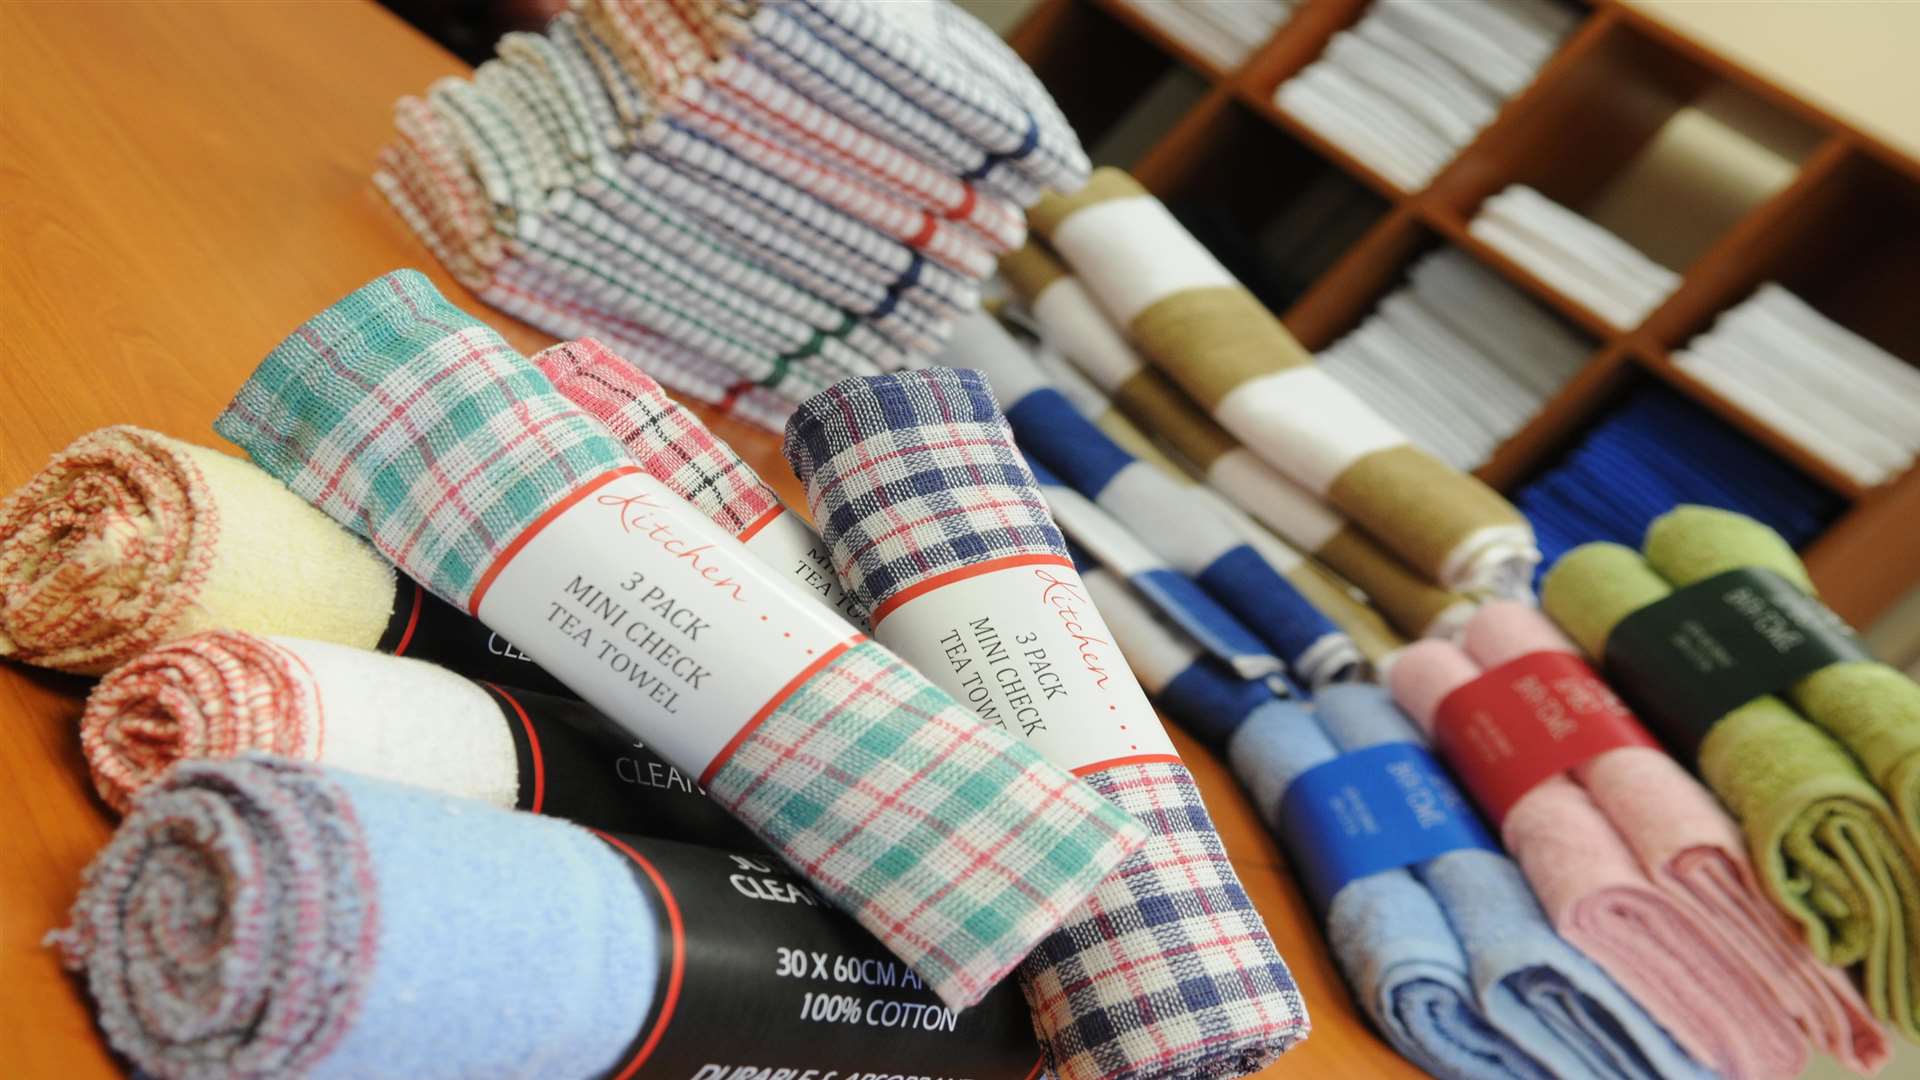 Elsatex supplies and manufactures textiles